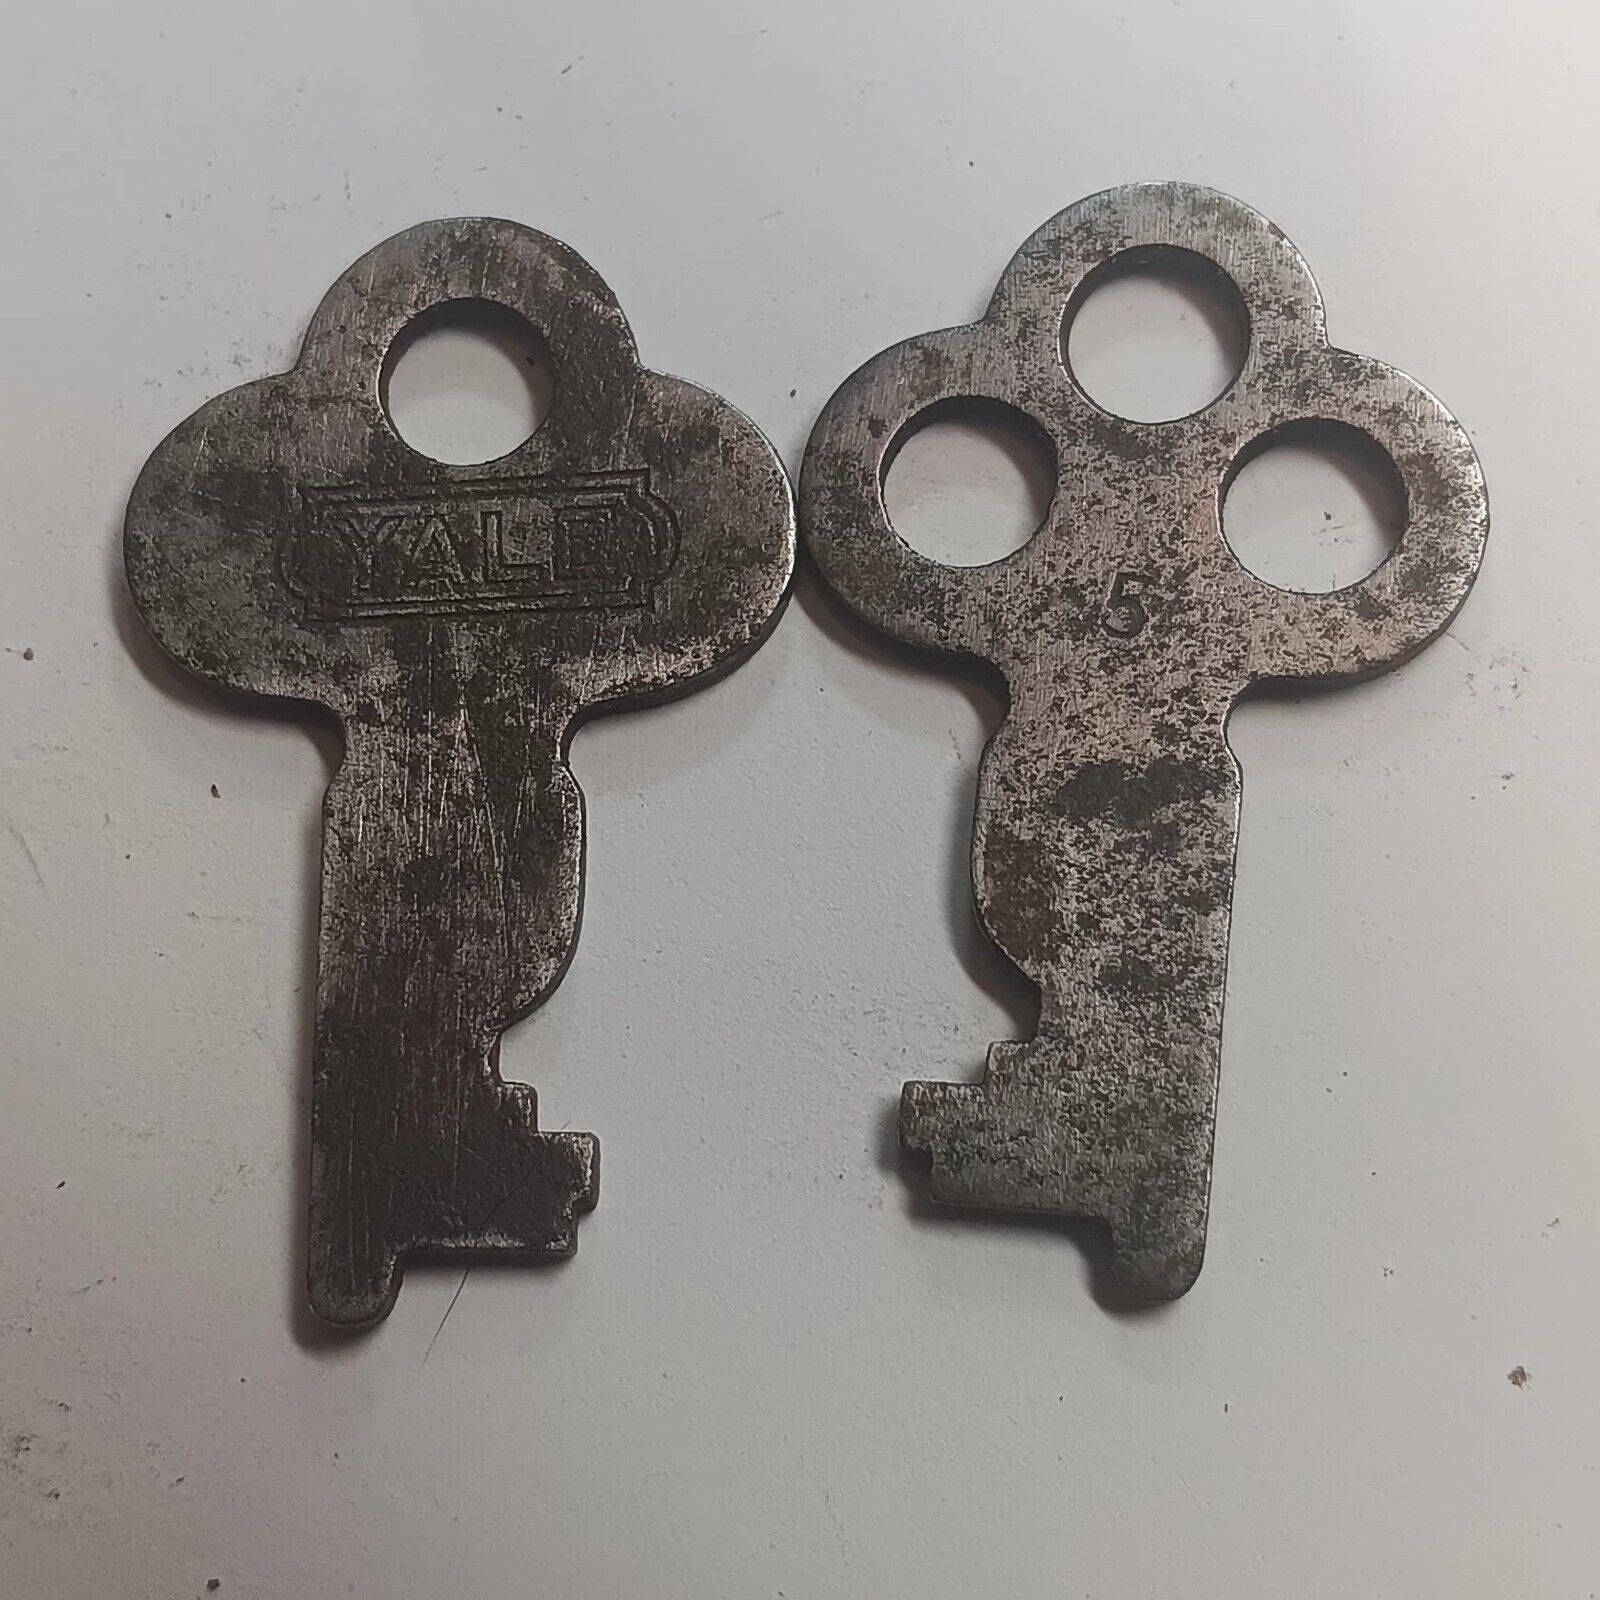 2 Antique Yale #5 Cabinet Keys.